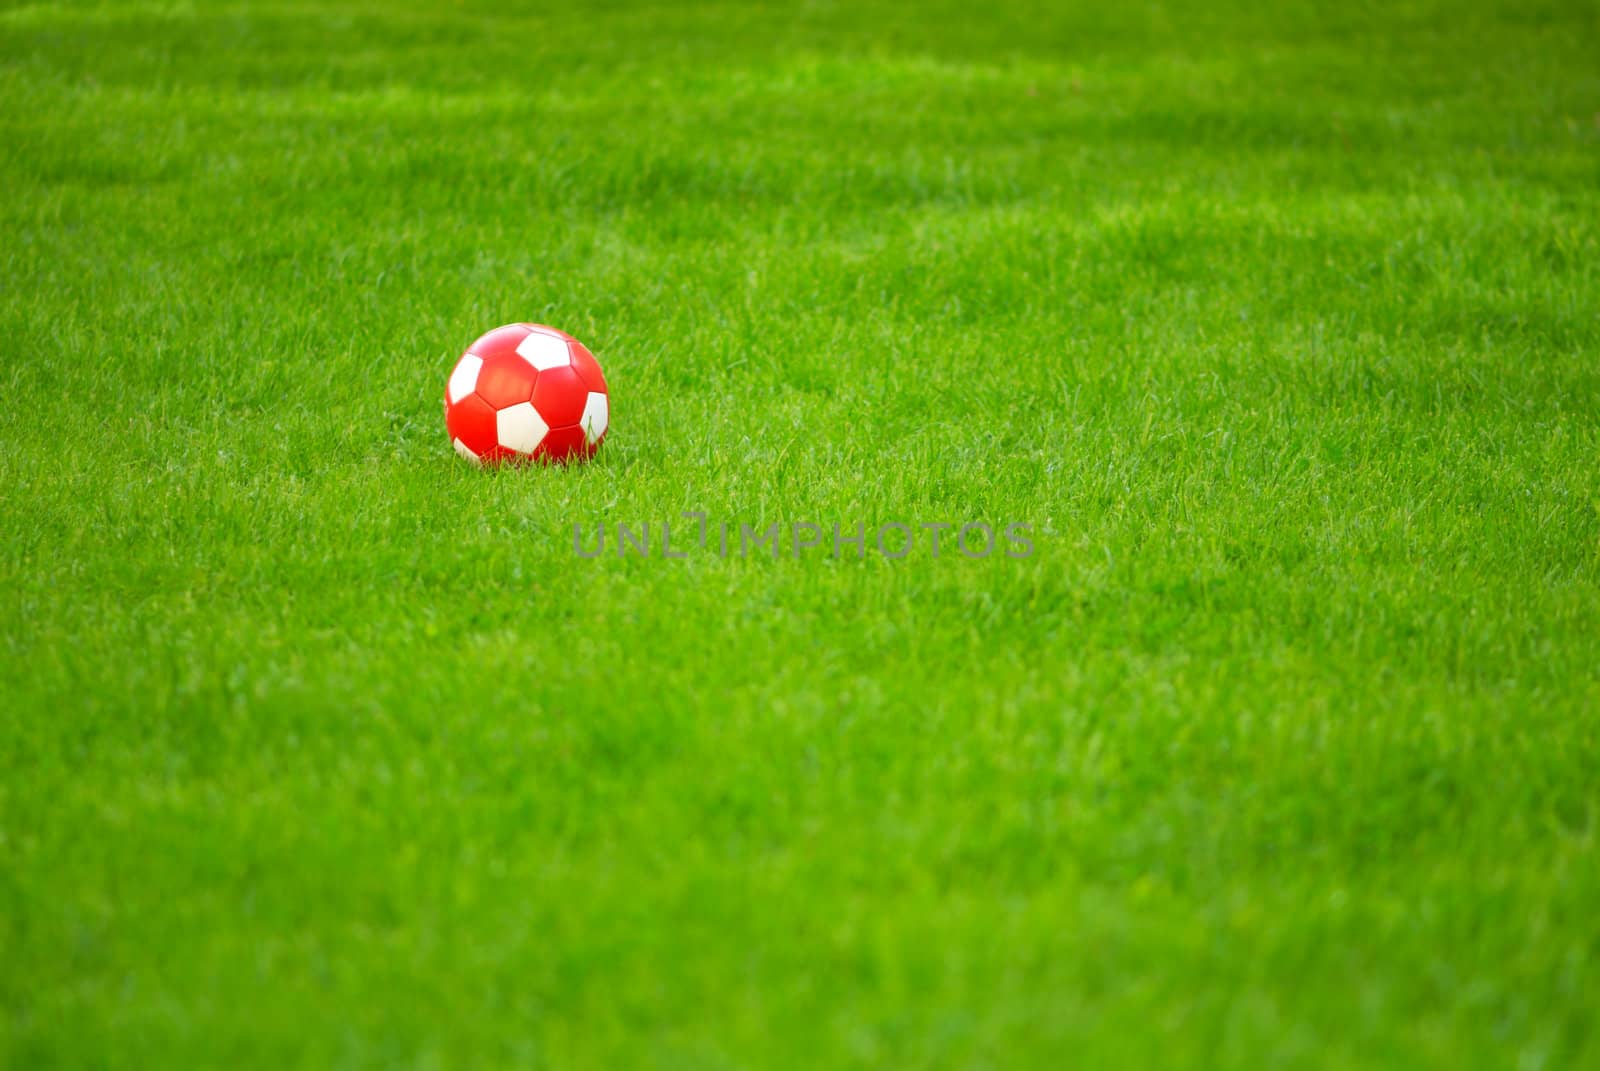 Red ball on green grass